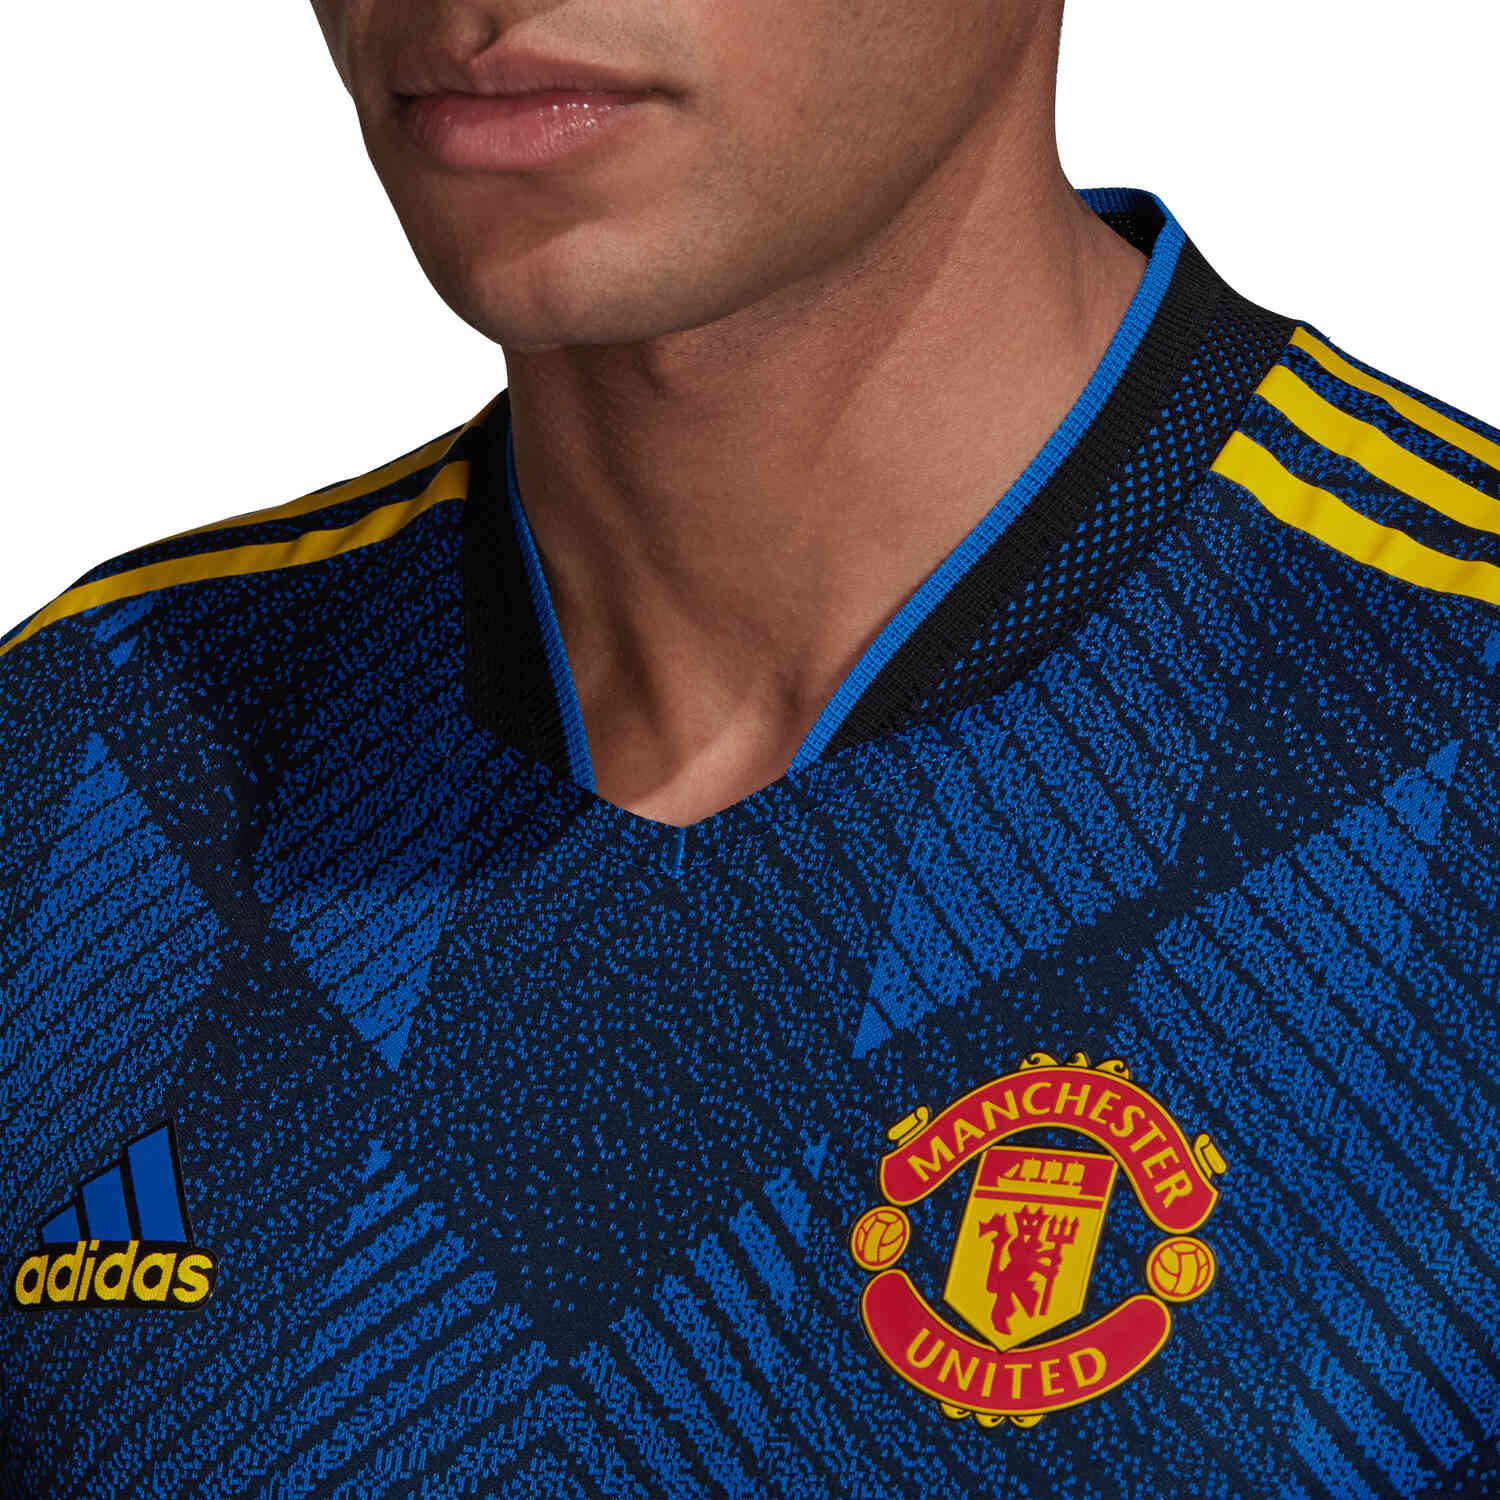 ronaldo manchester united jersey blue